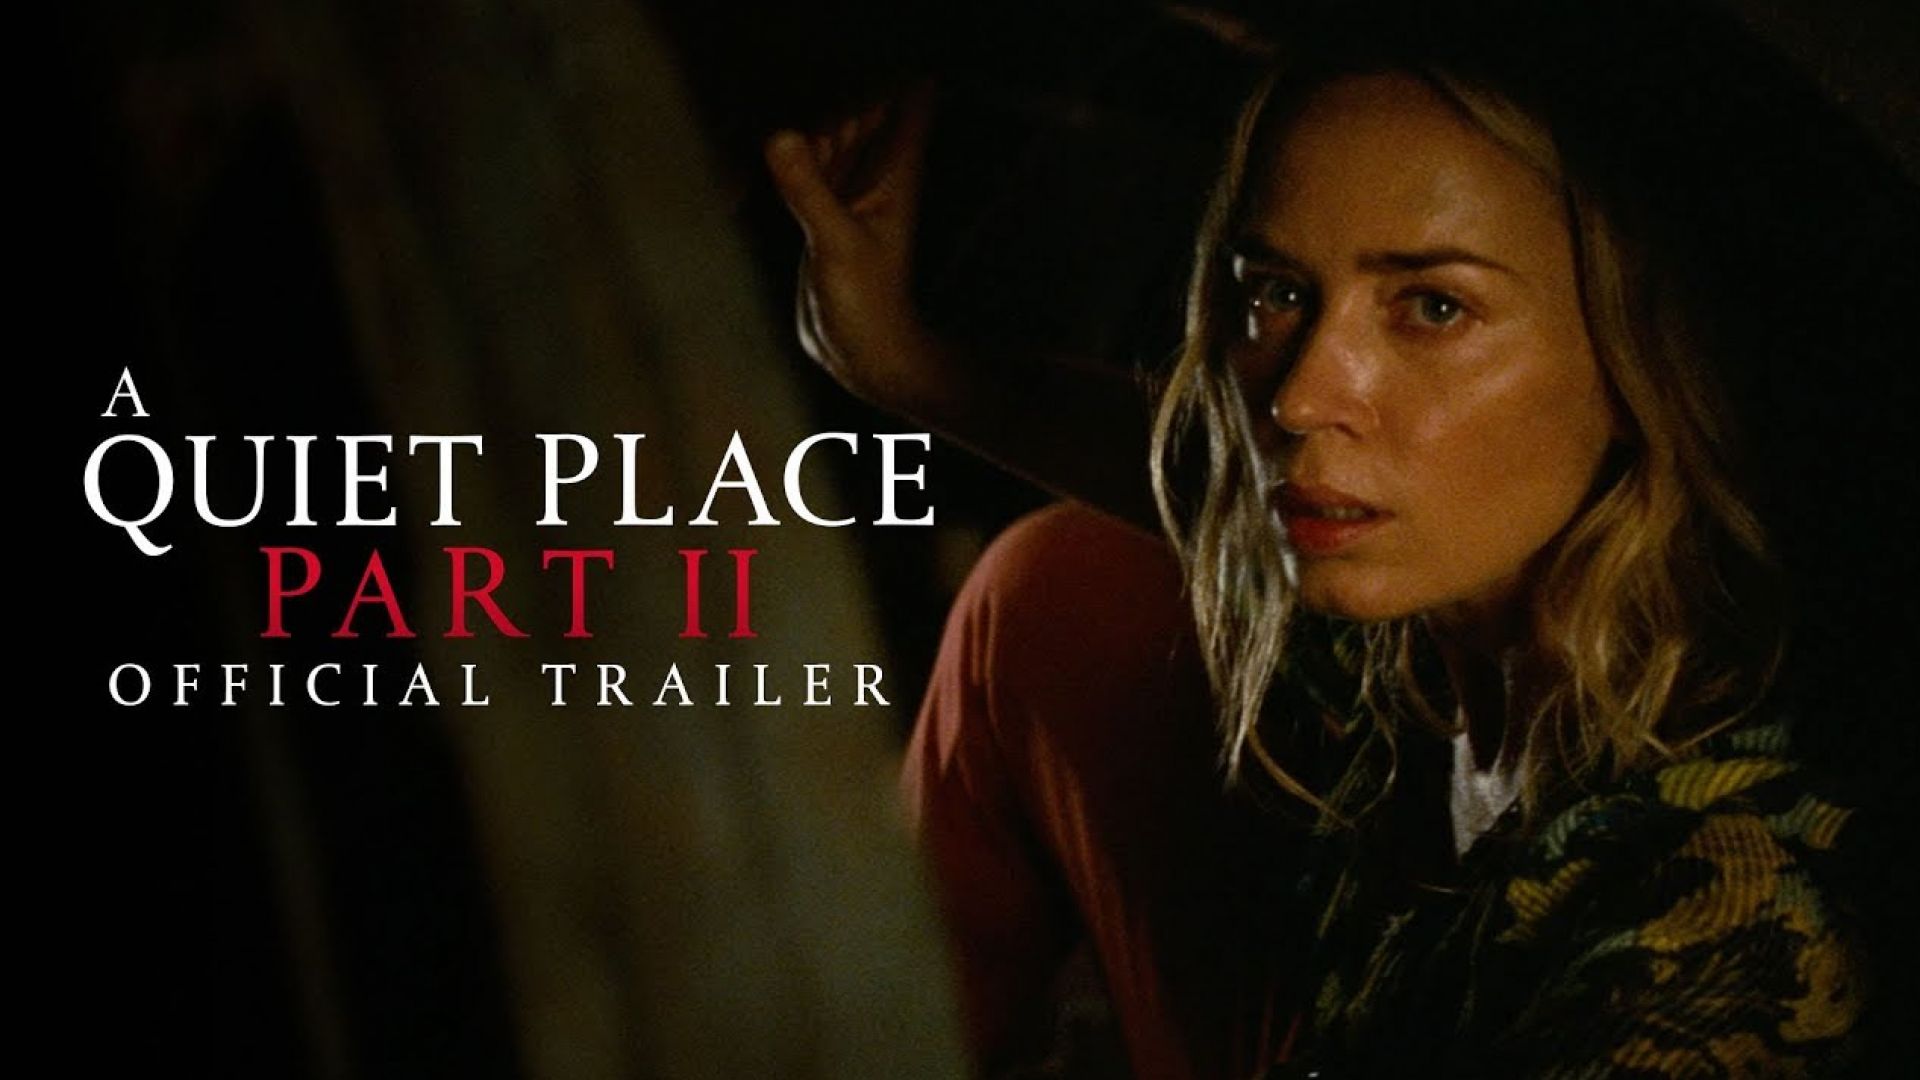 ‘A Quiet Place Part II’ Official Trailer